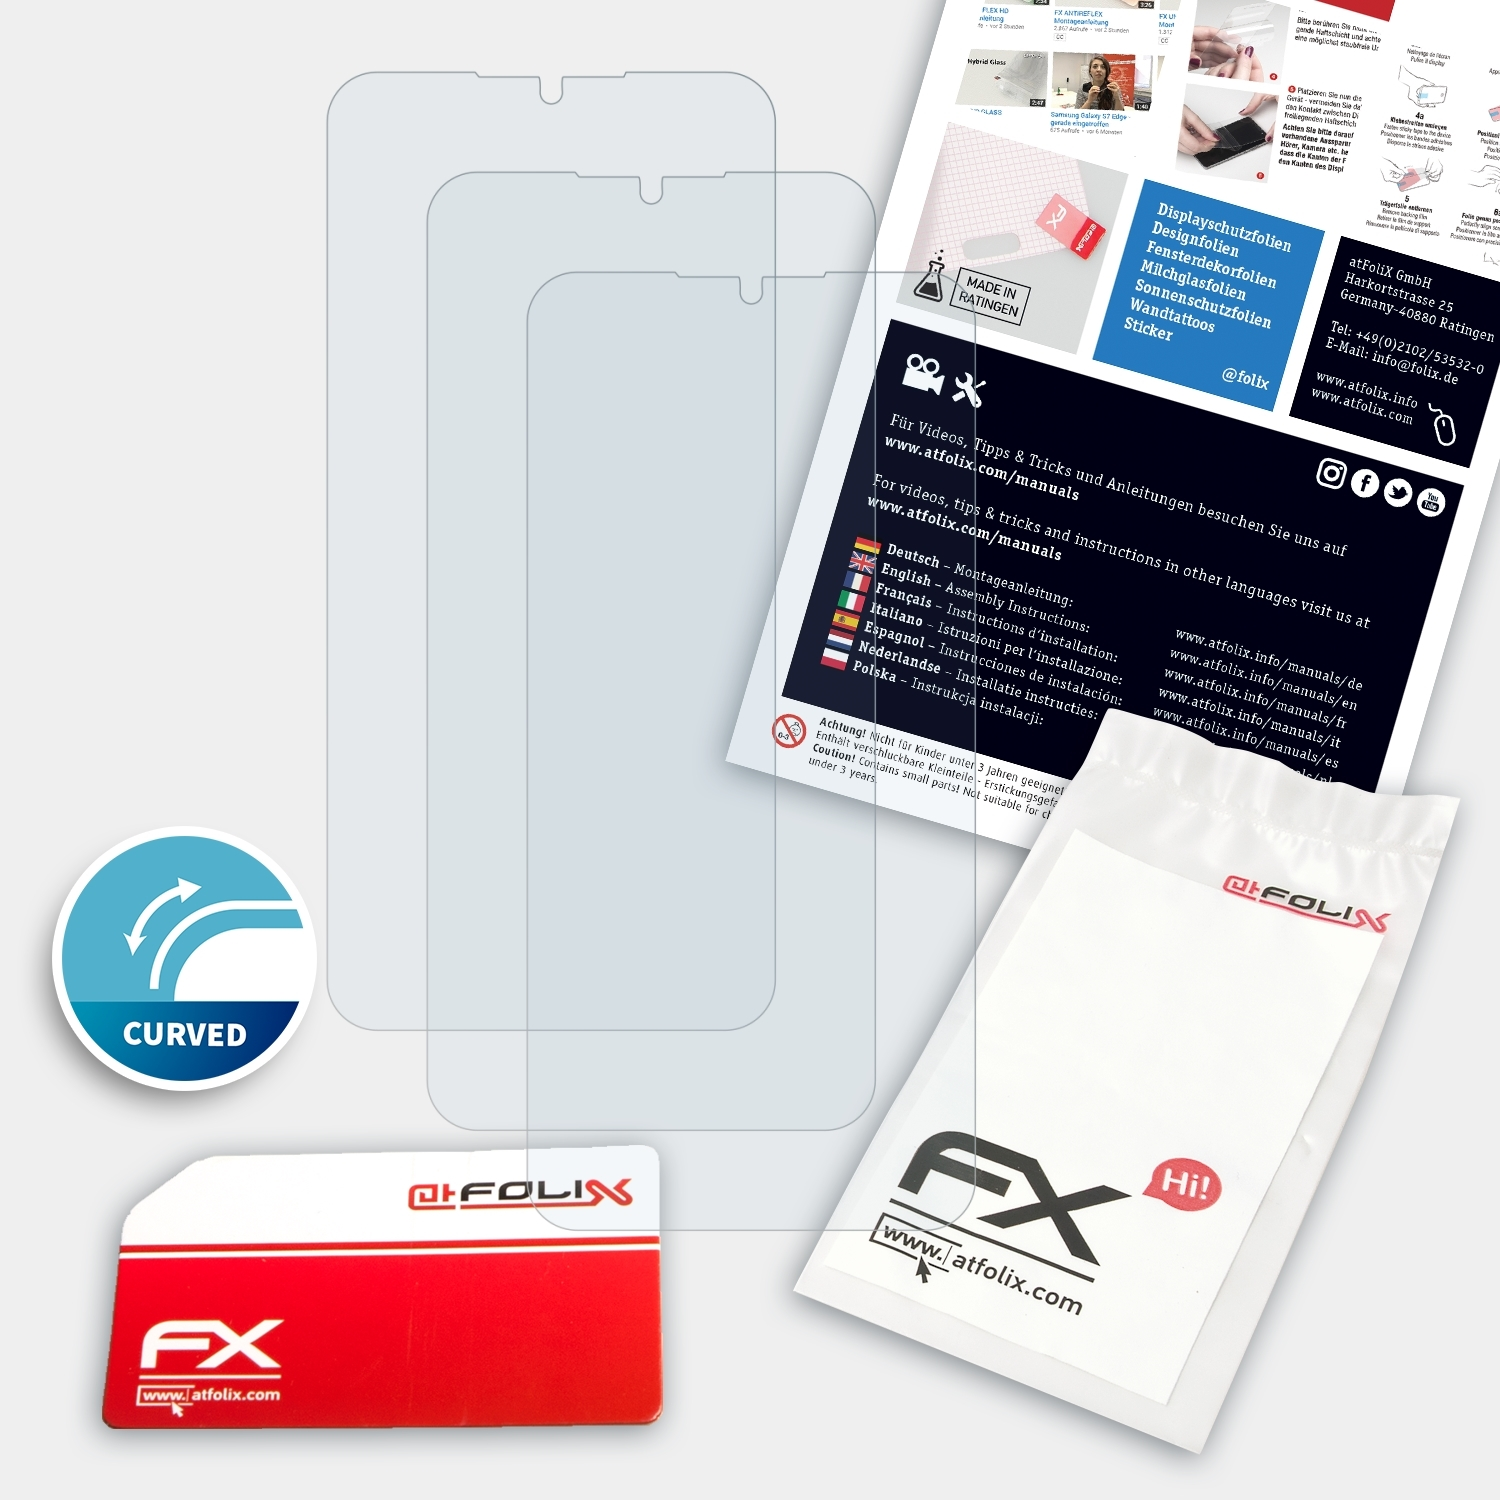 ATFOLIX 3x X23) FX-ActiFleX Displayschutz(für Vivo